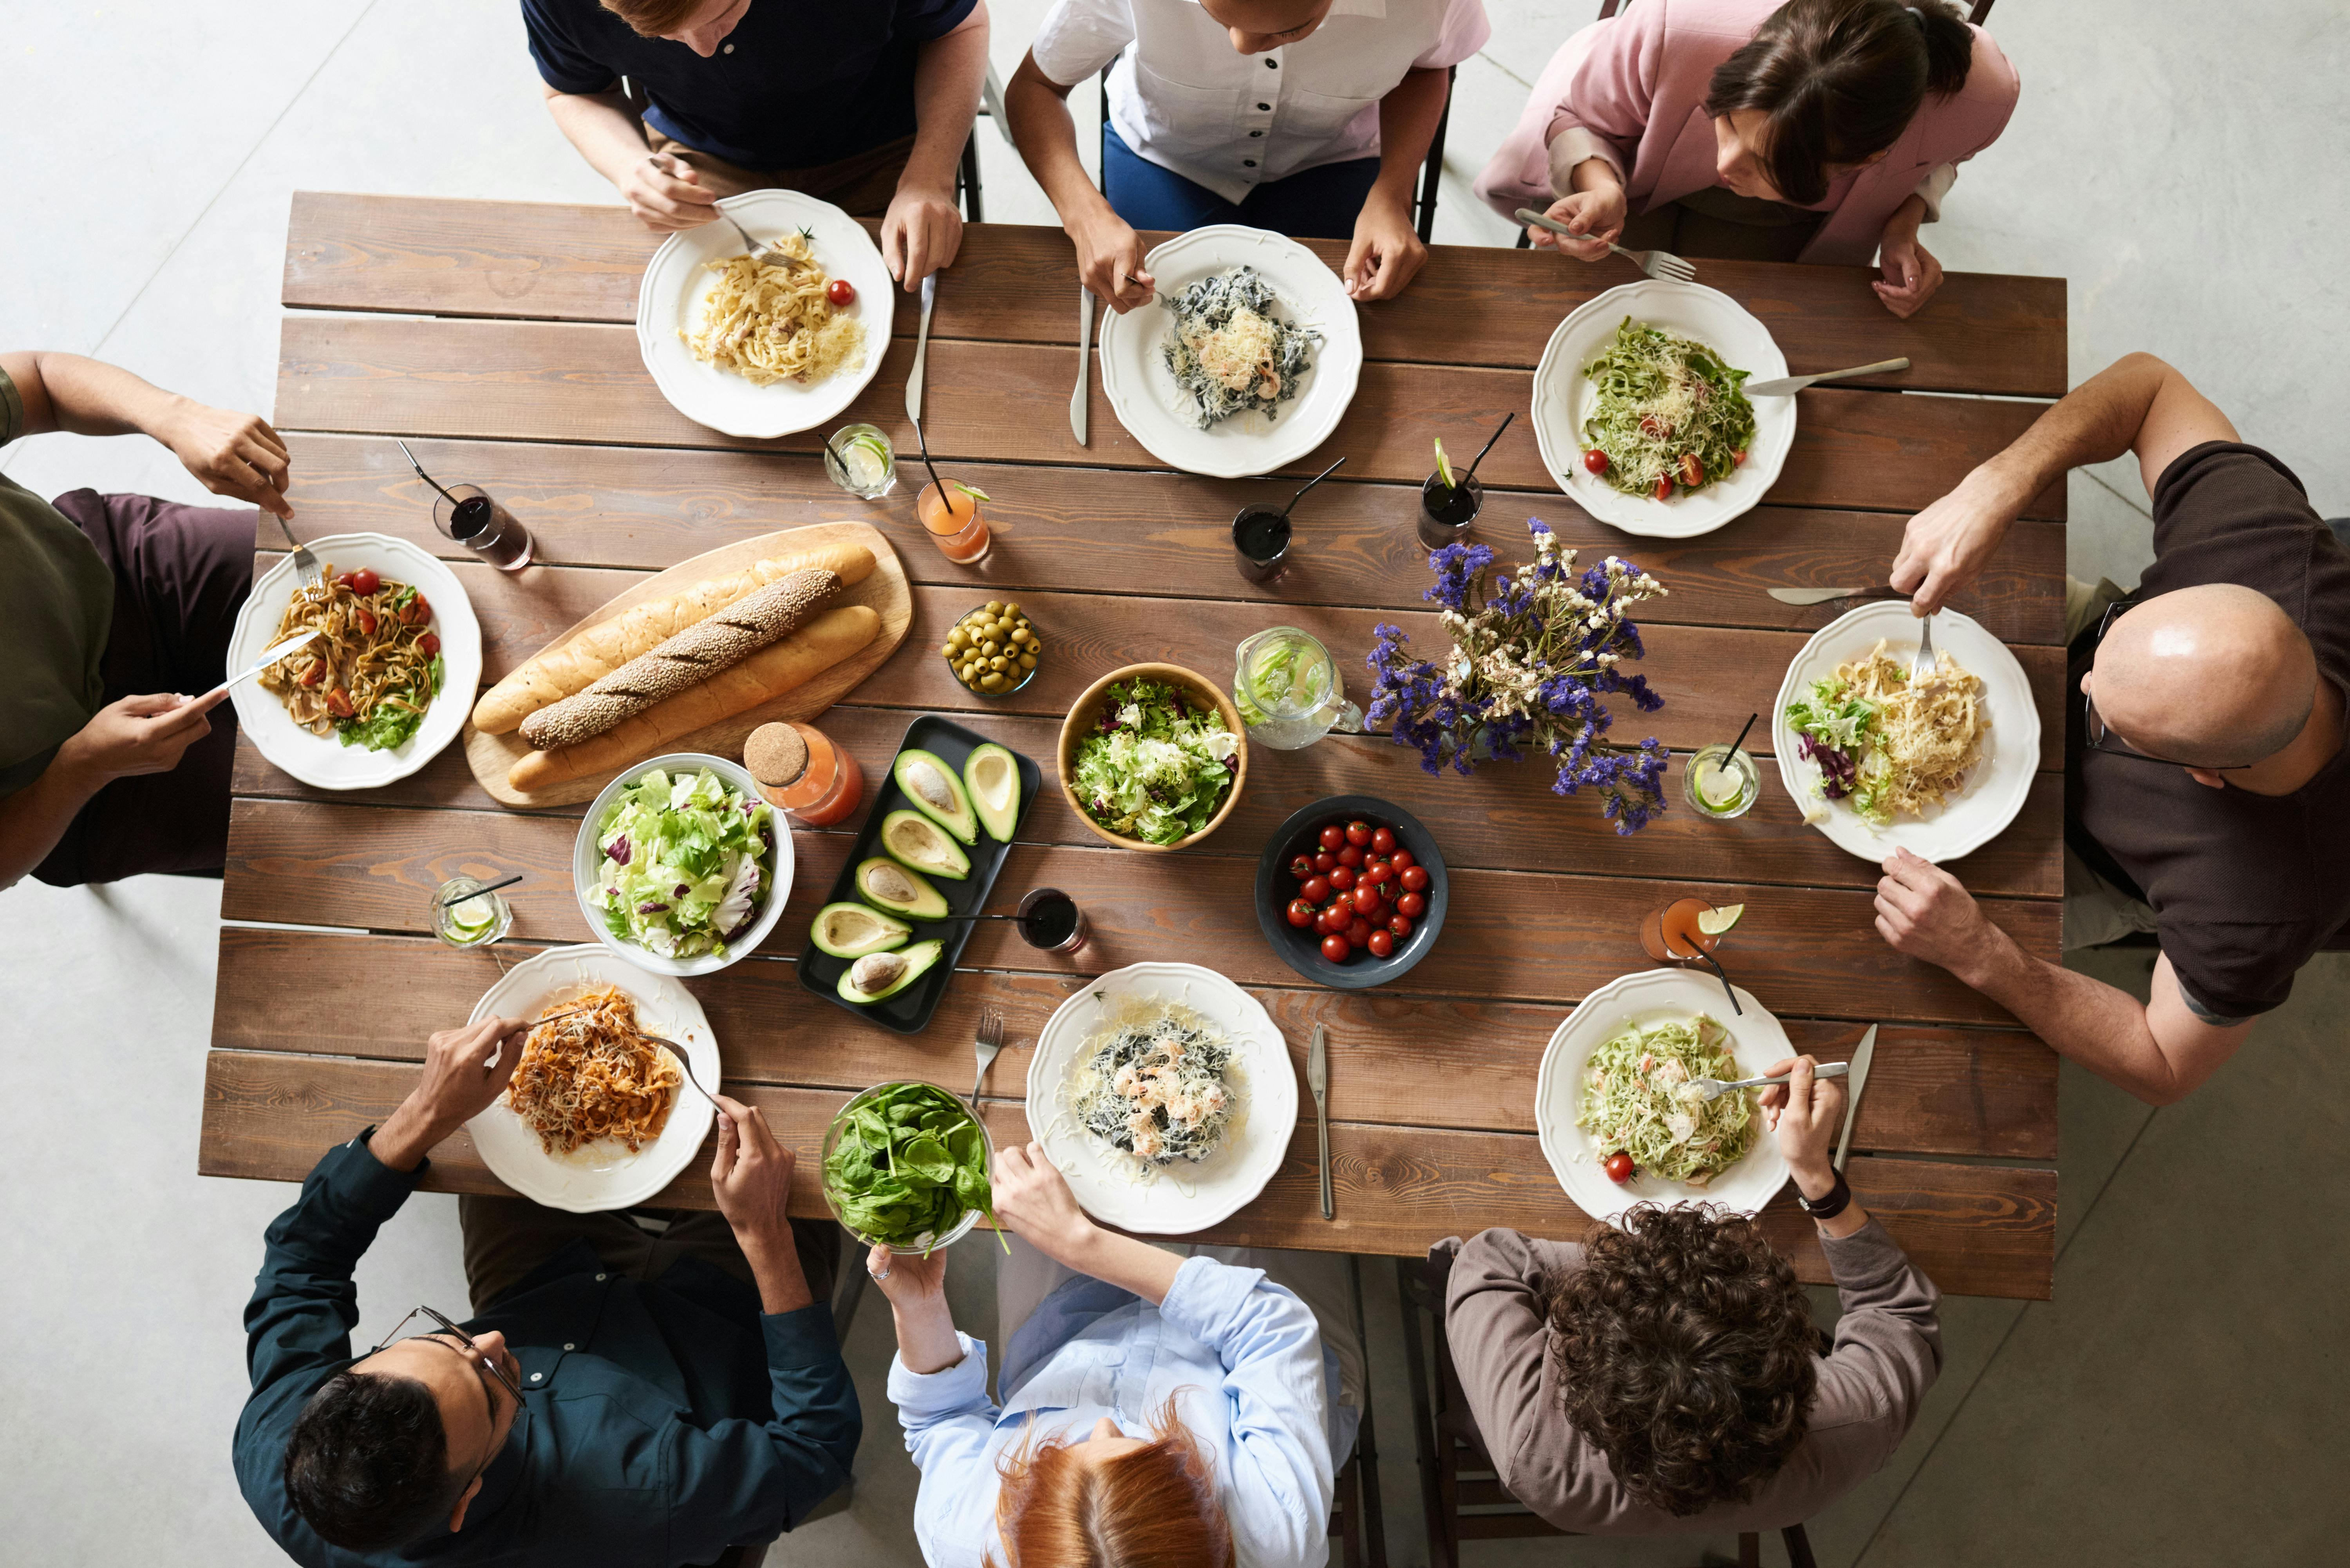 People eating together | Source: Pexels